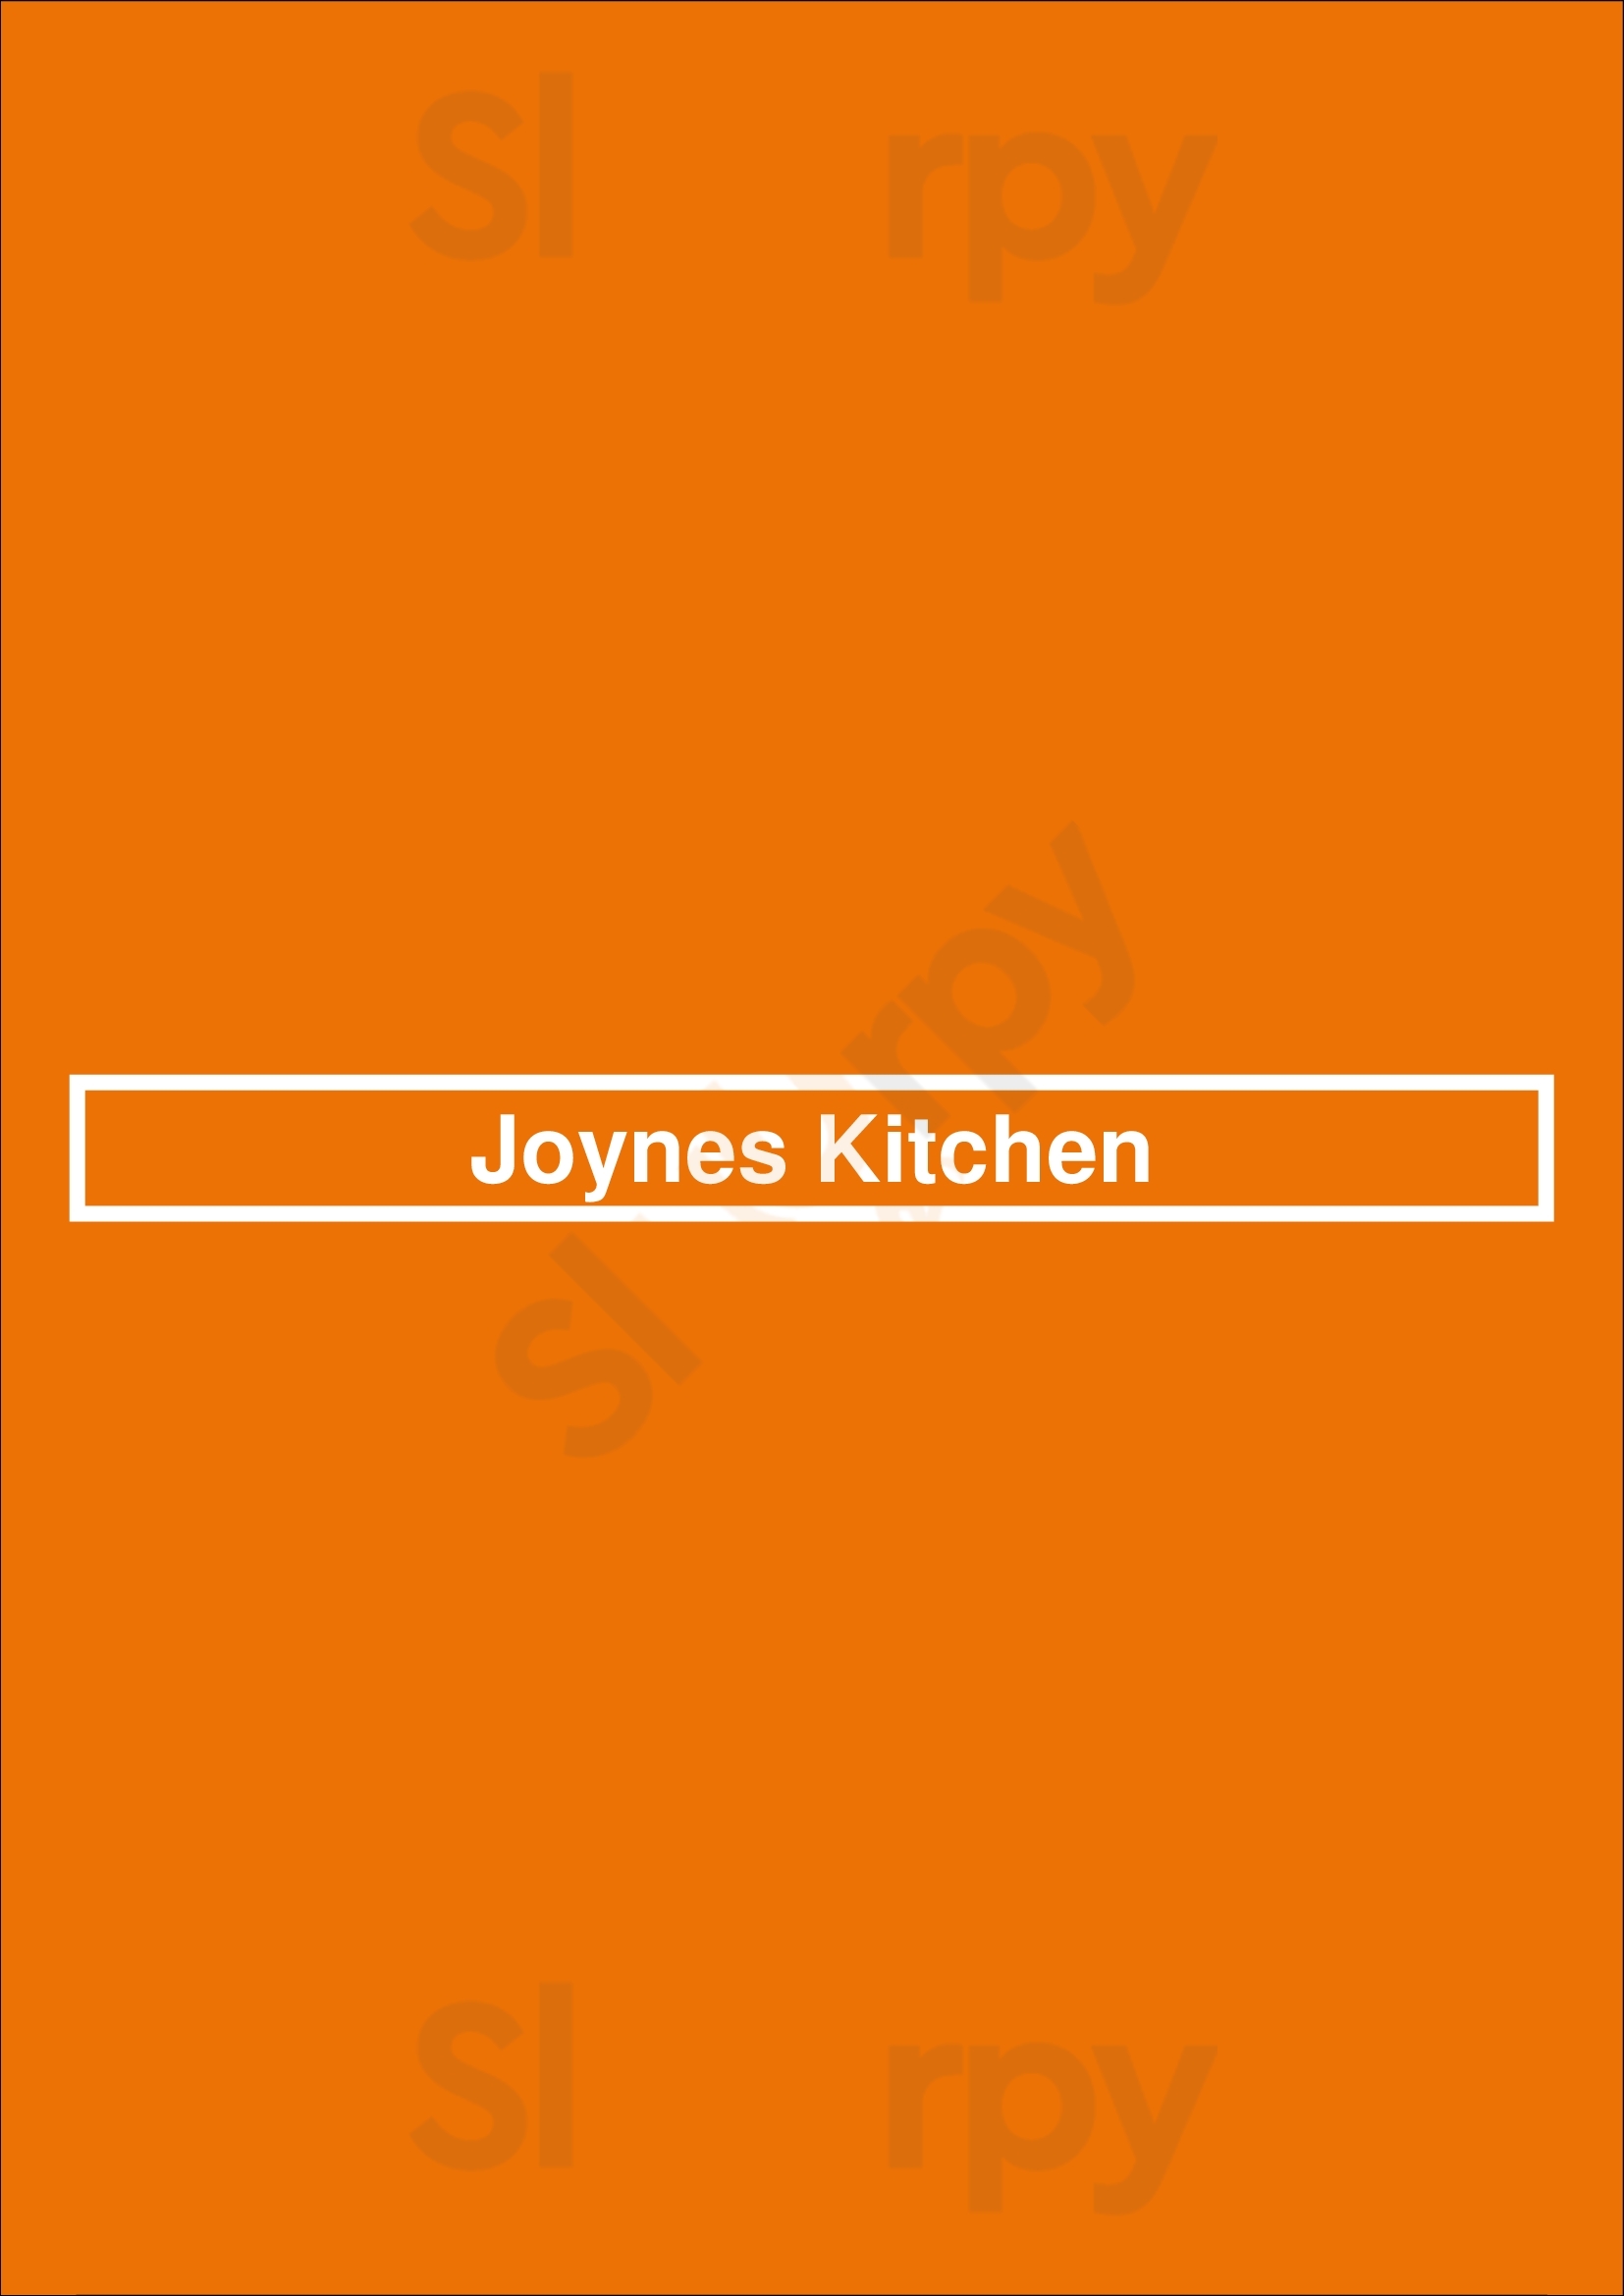 Joynes Kitchen Berlin Menu - 1